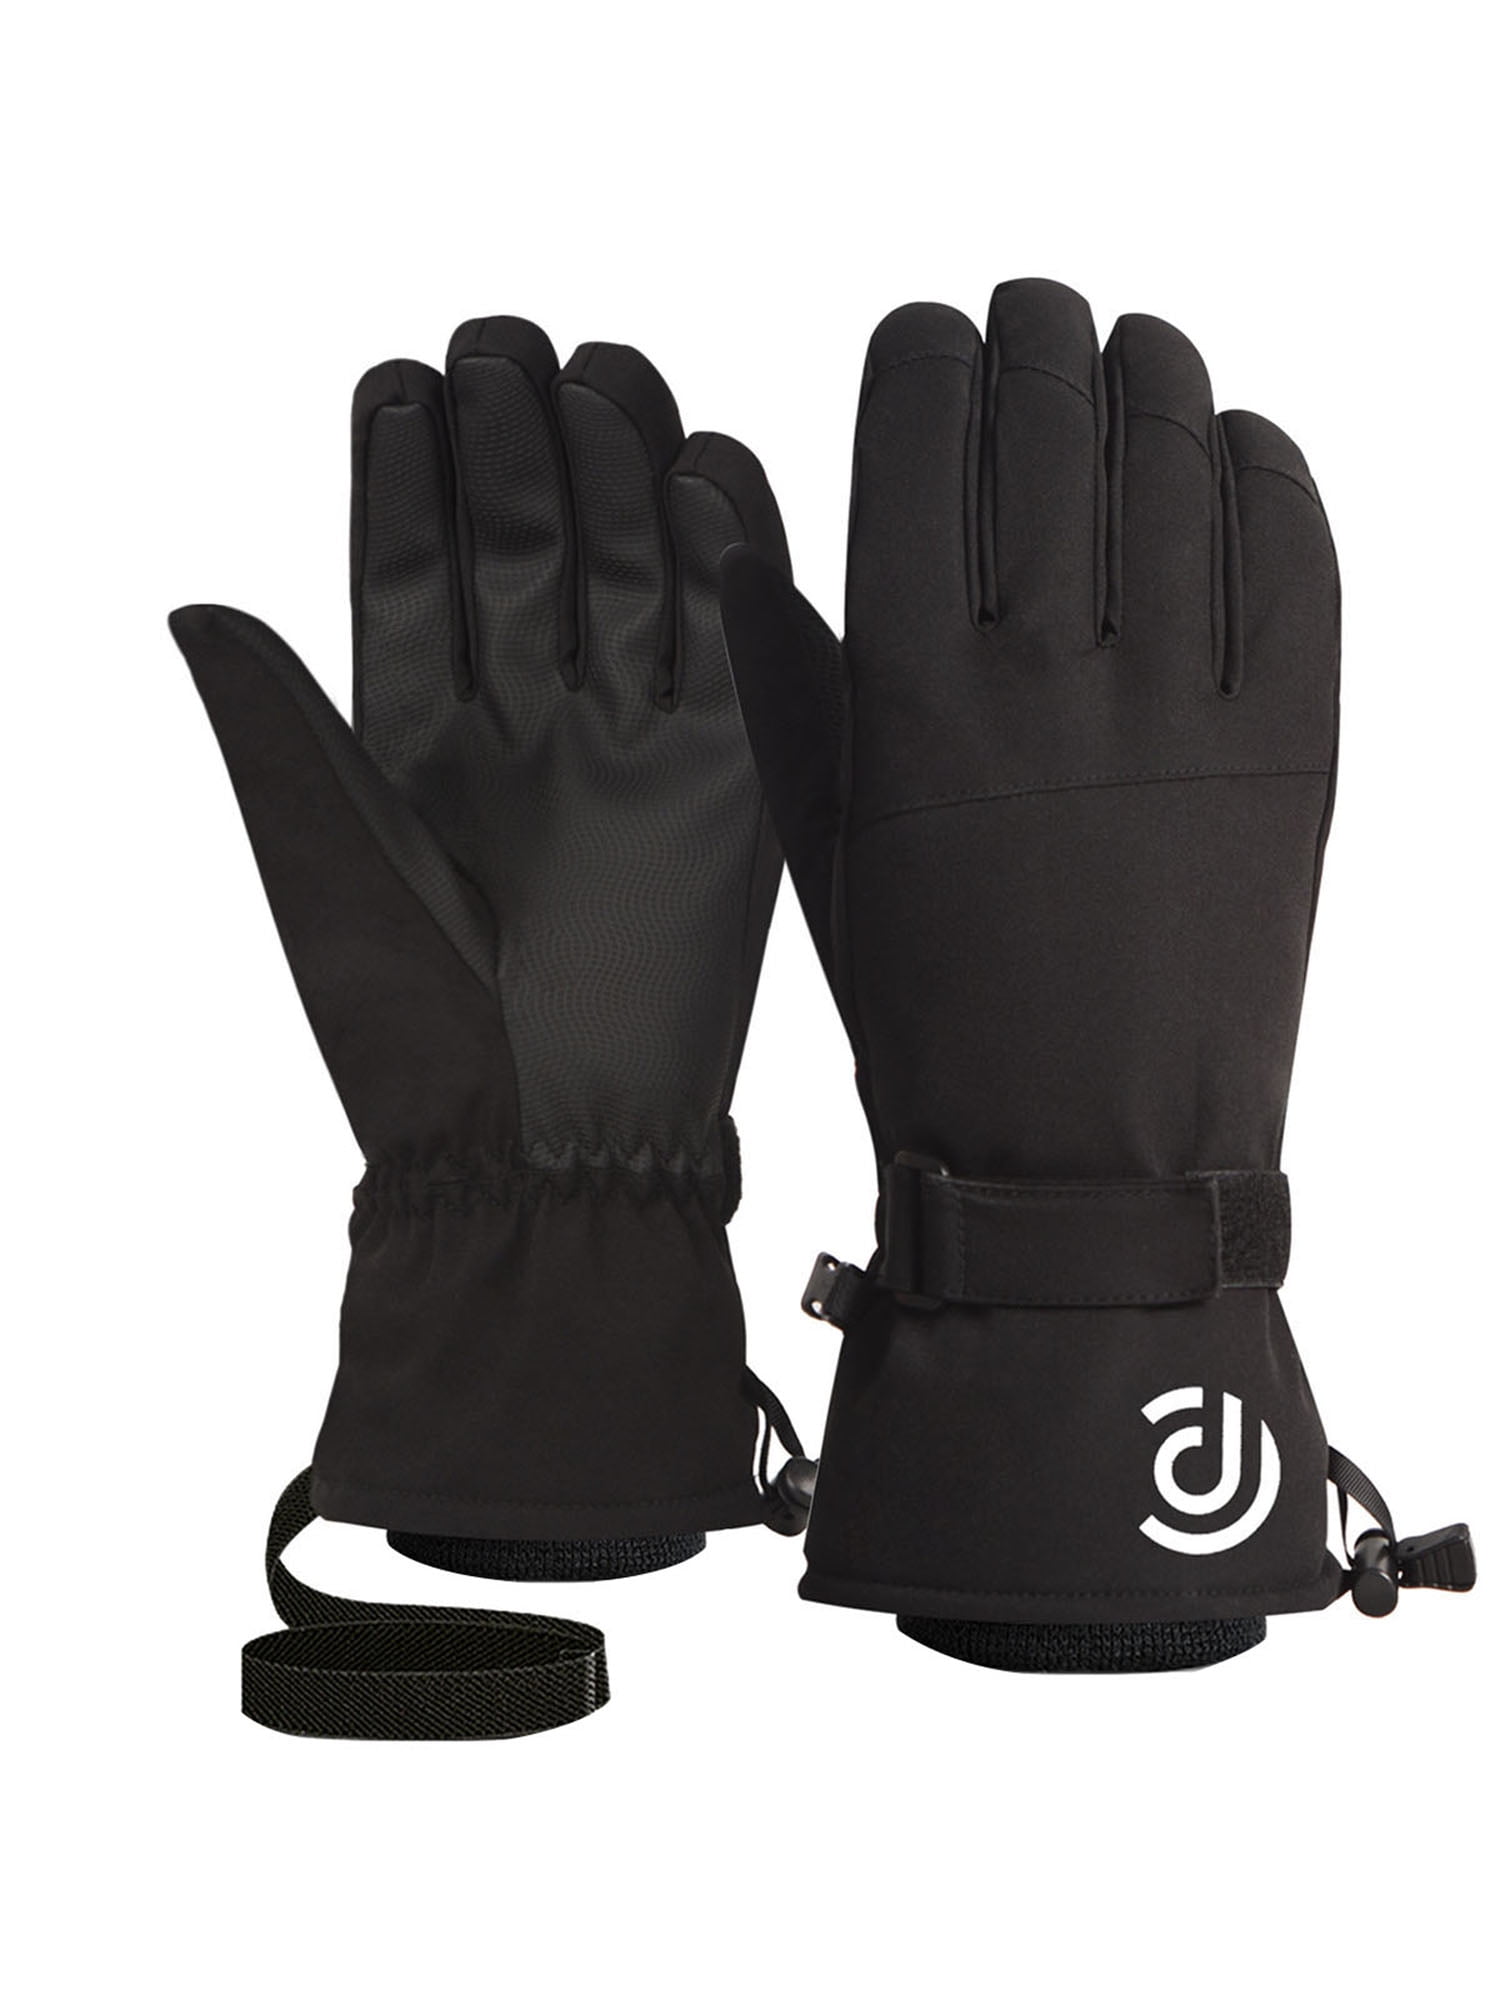 Men and Women Winter Gloves Ski Snowboard Snow Thermal Waterproof Unisex 